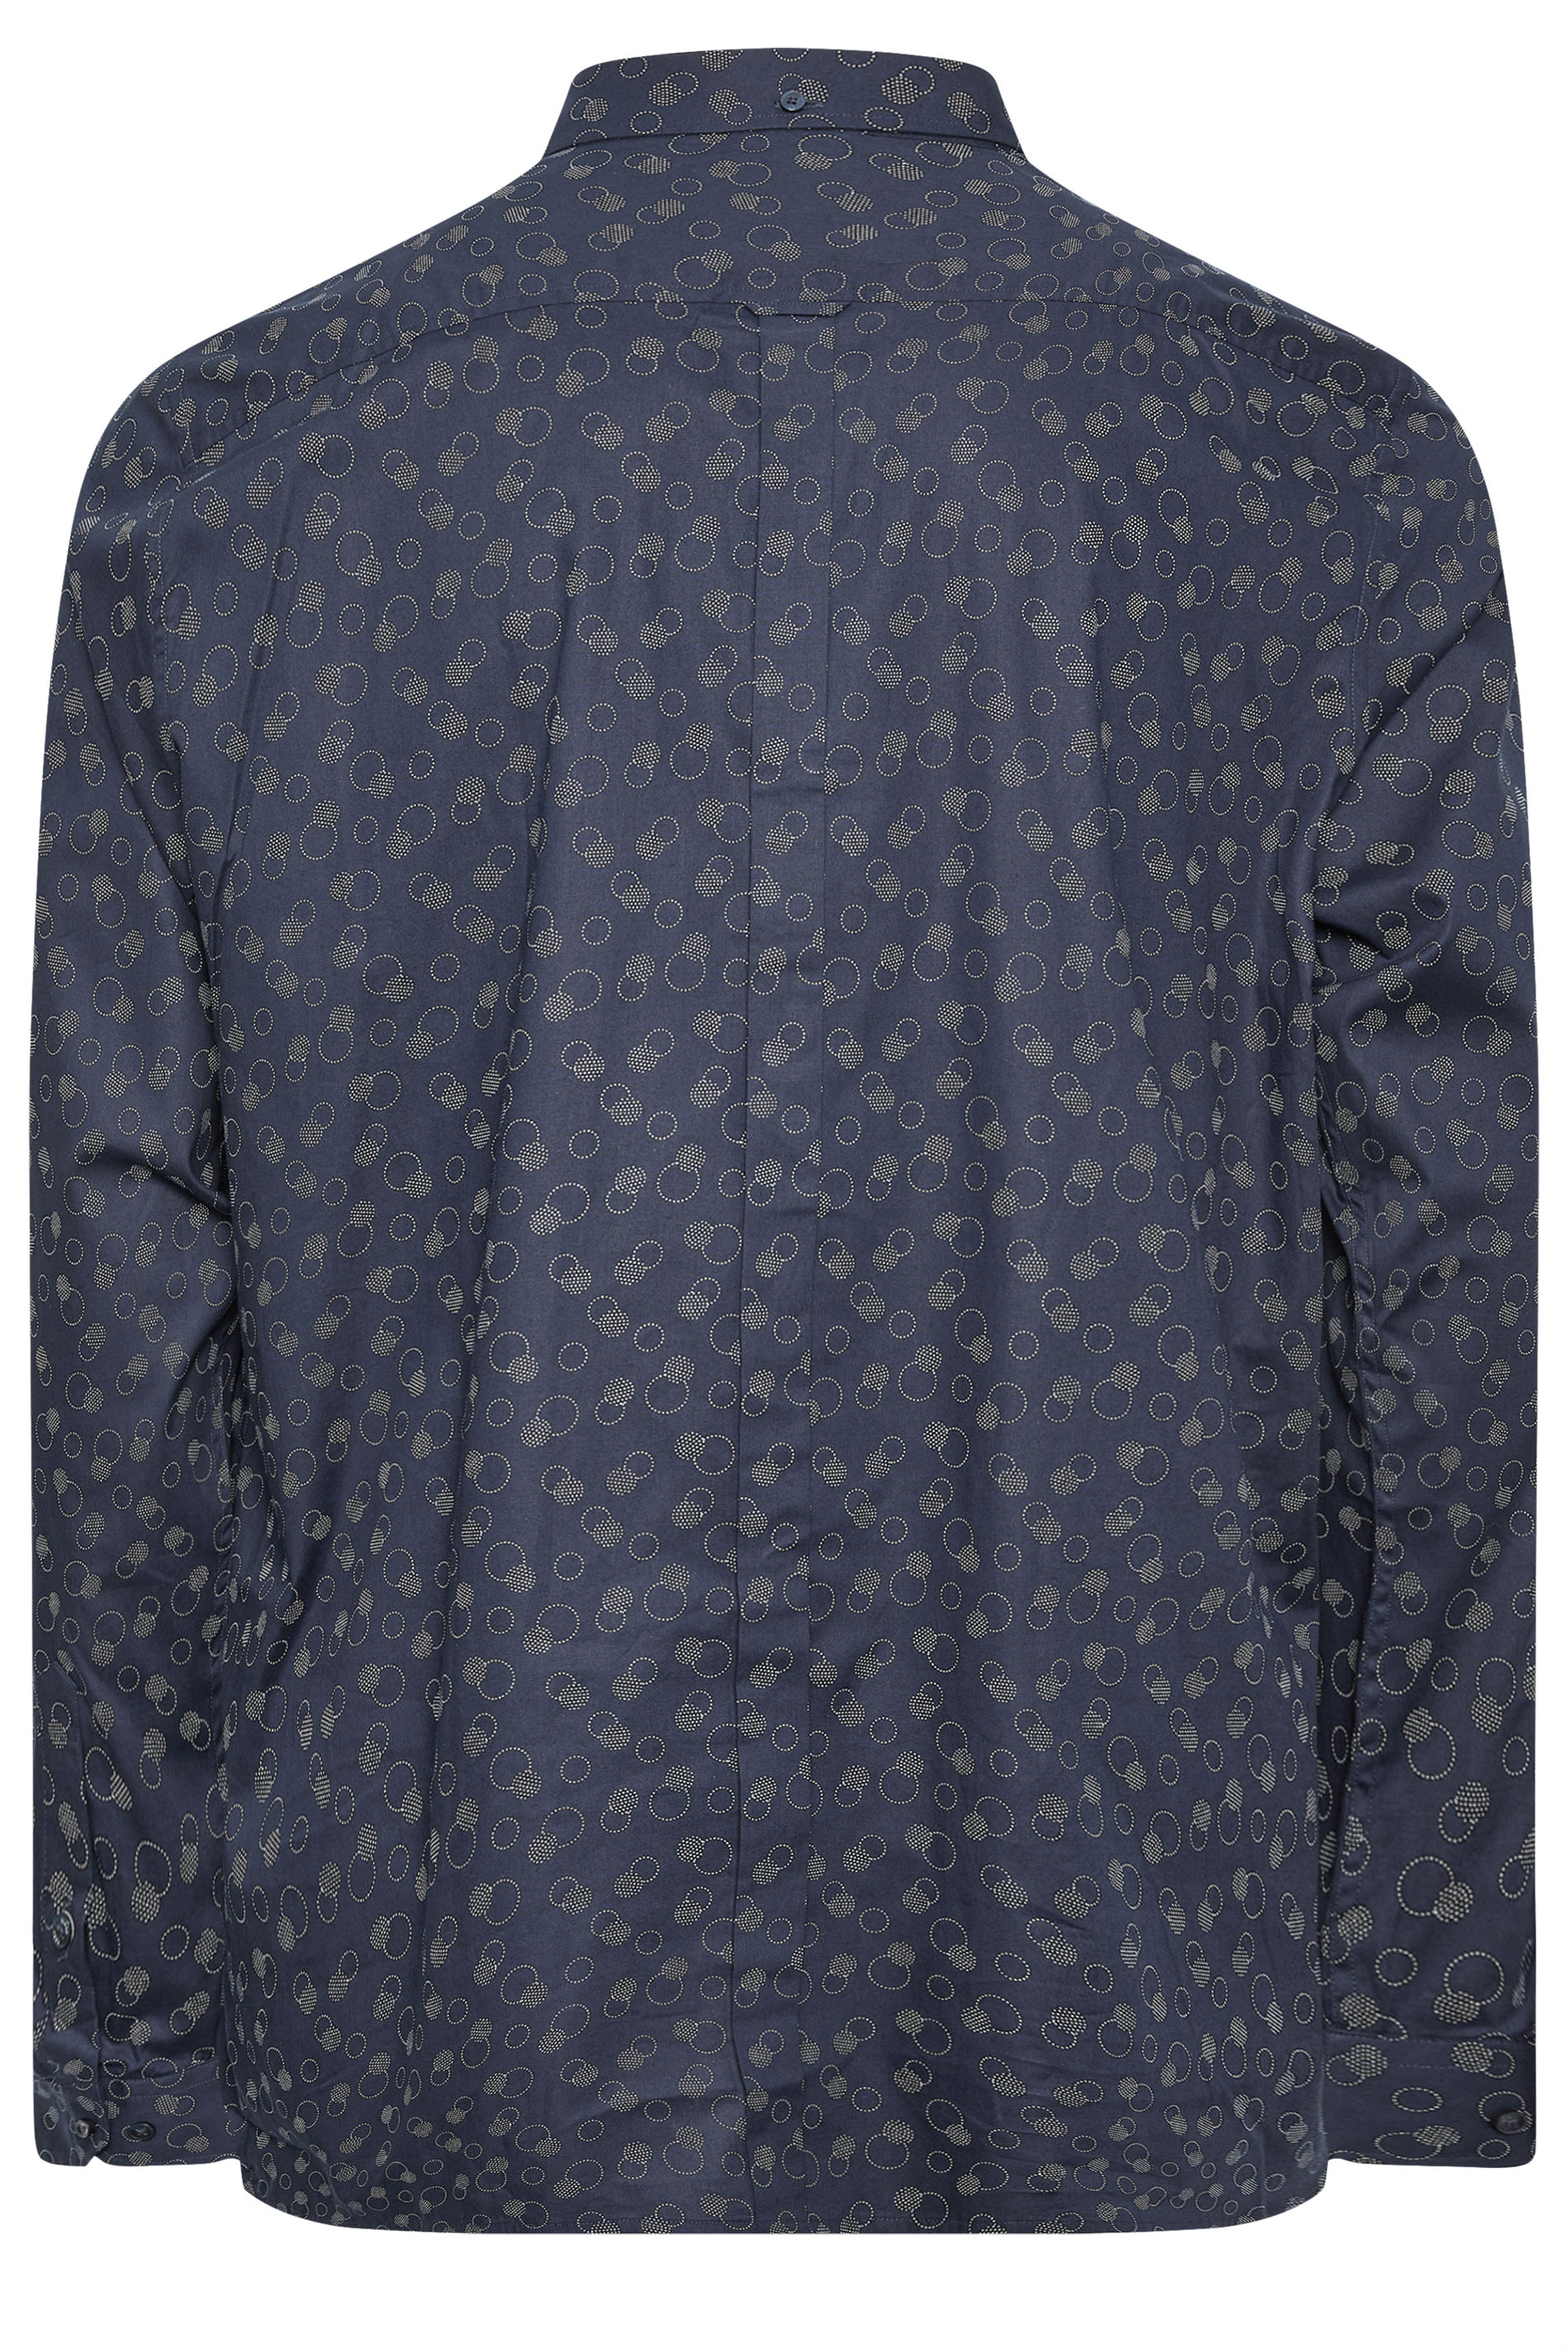 BEN SHERMAN Navy Blue Stipple Print Long Sleeve Shirt | BadRhino 3